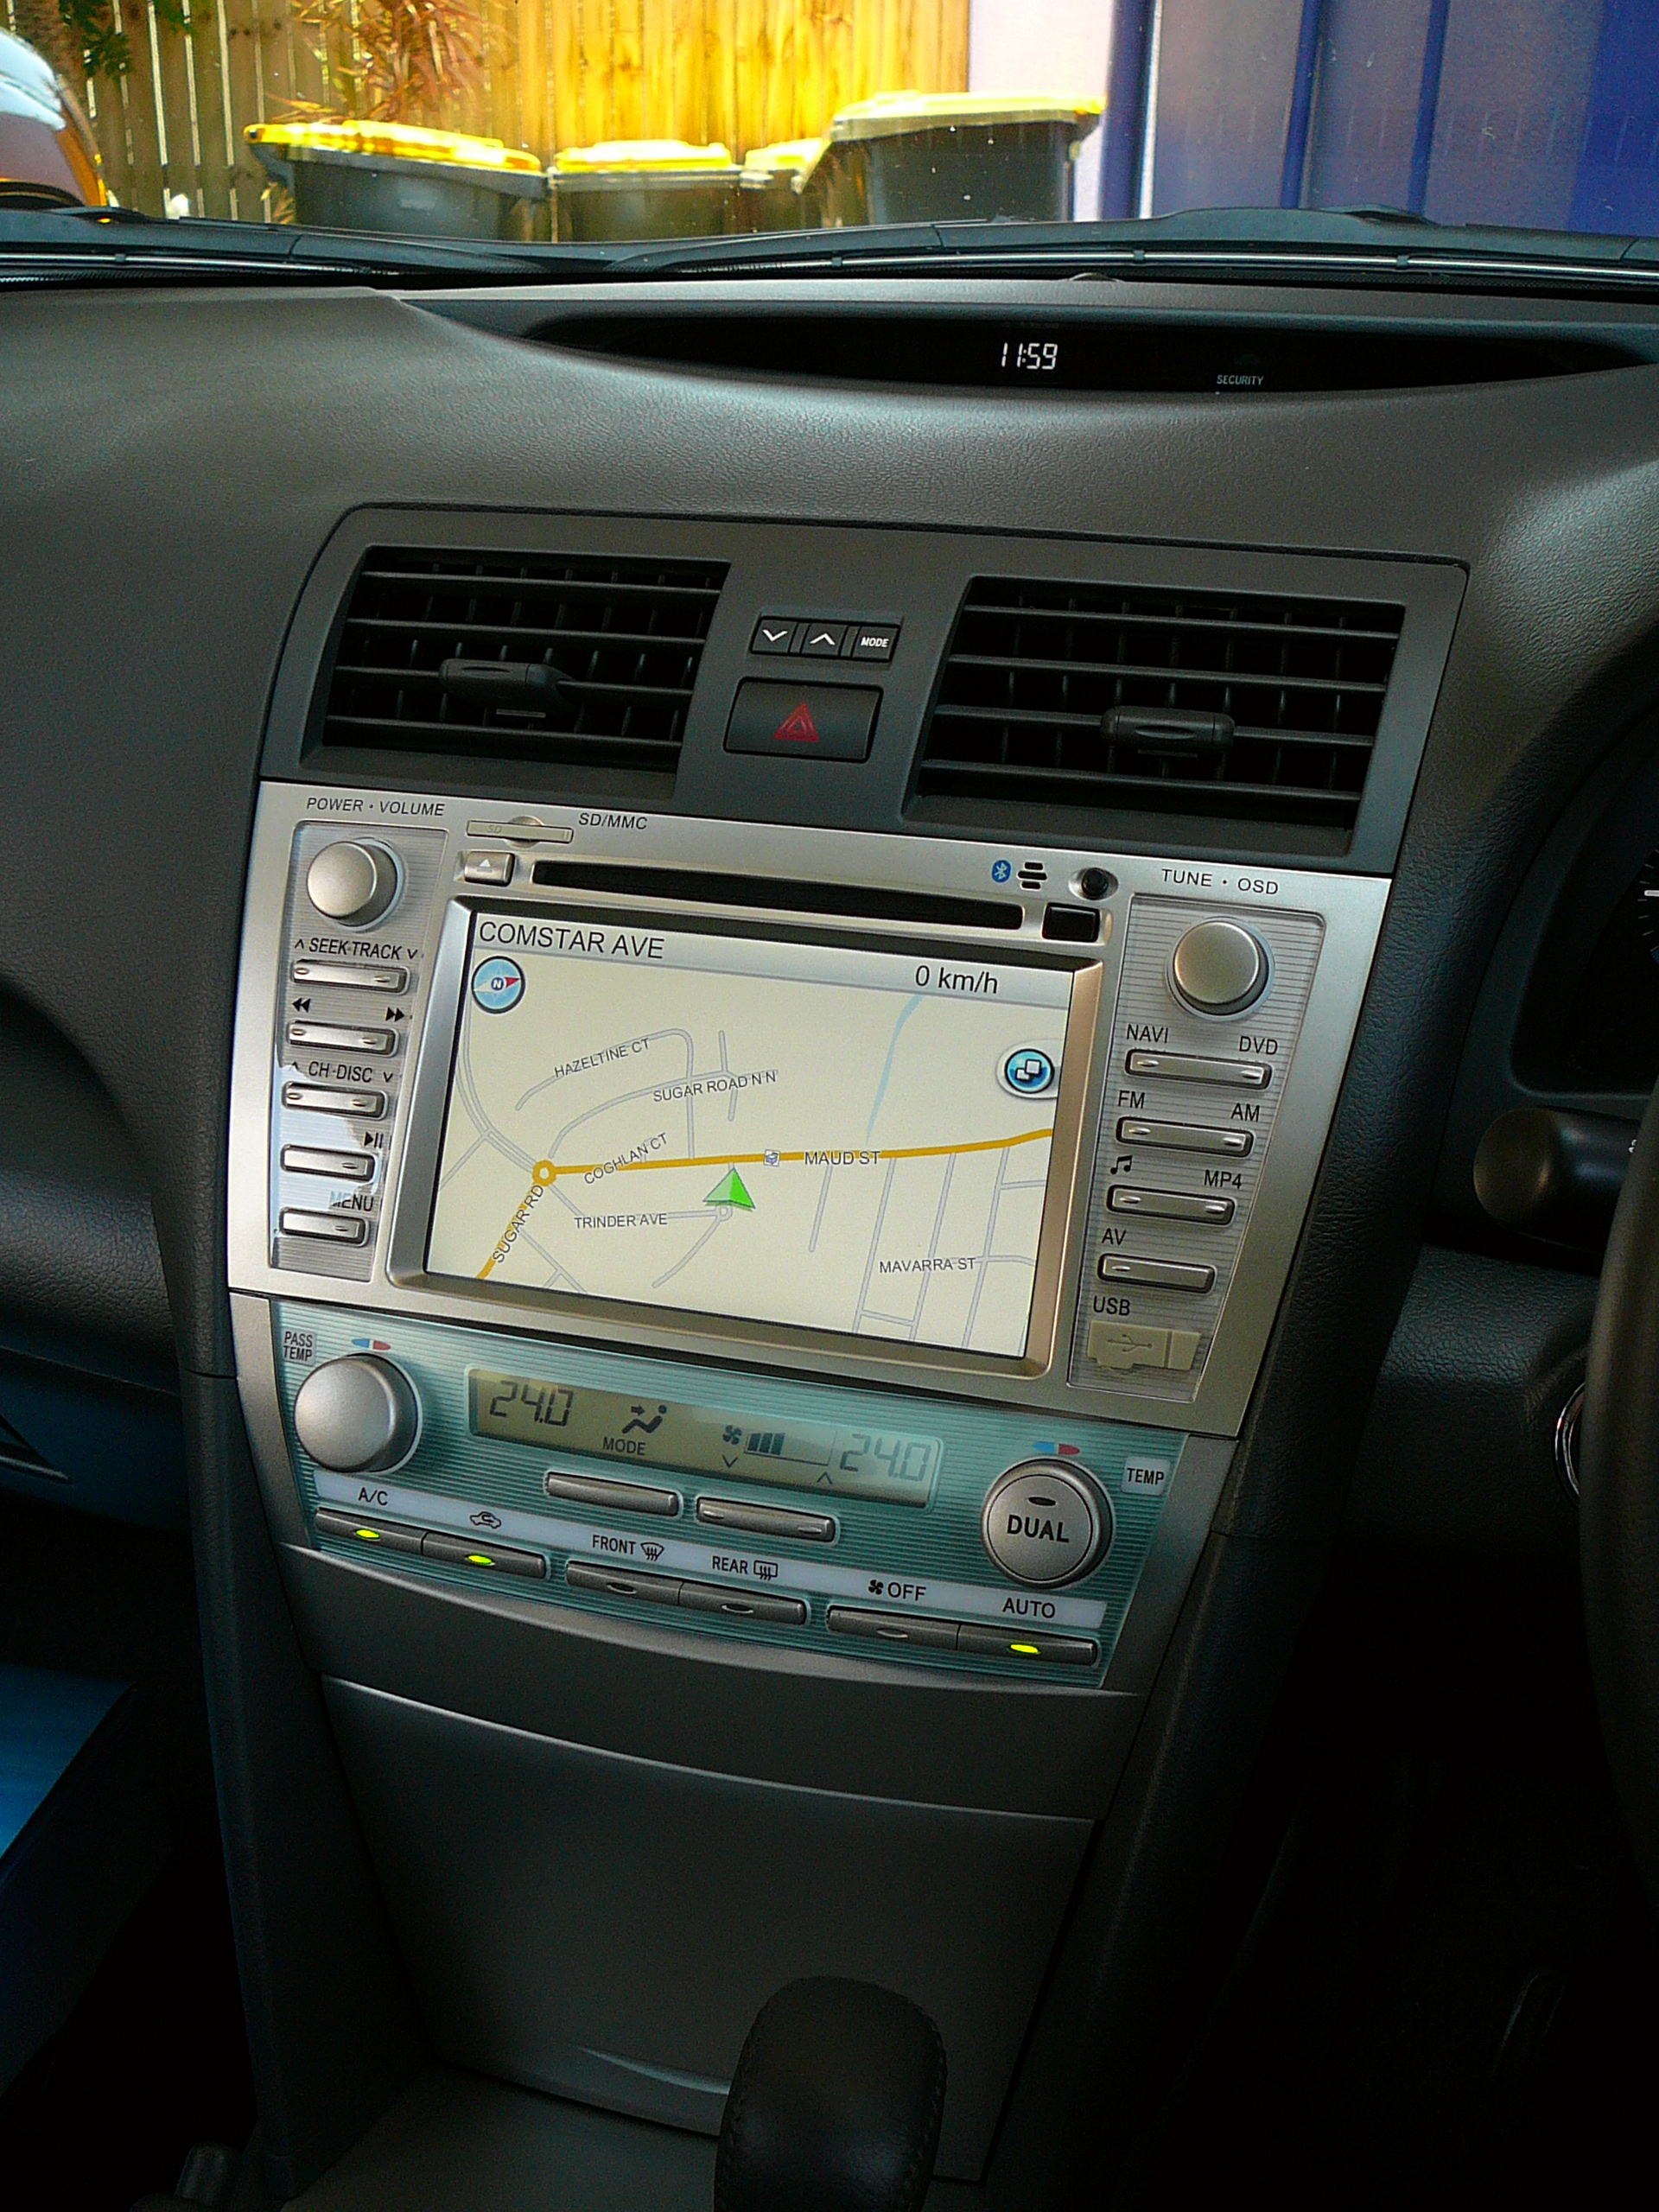 Toyota Aurion, Opal GPS Navigation Unit & Reverse Camera